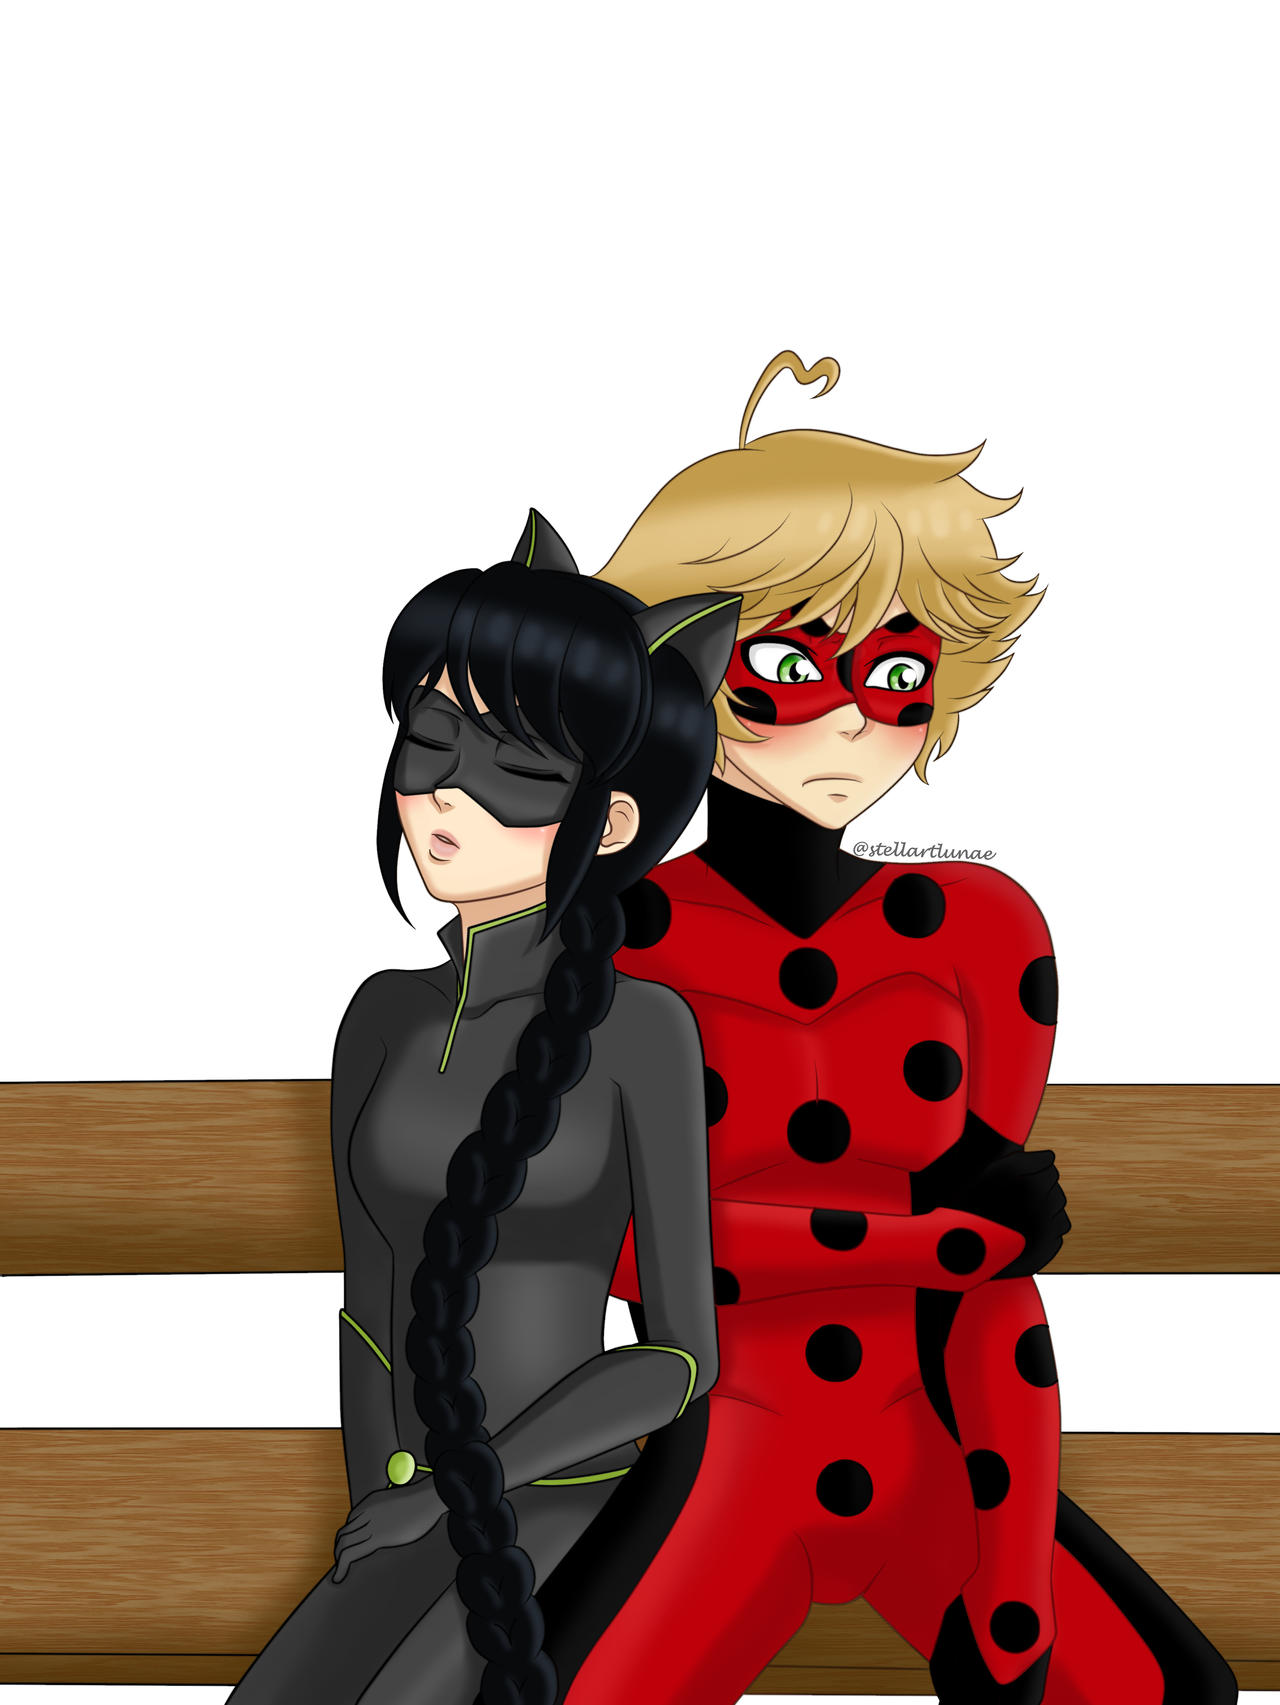 Ladybug and Chat Noir by majuandrad on DeviantArt